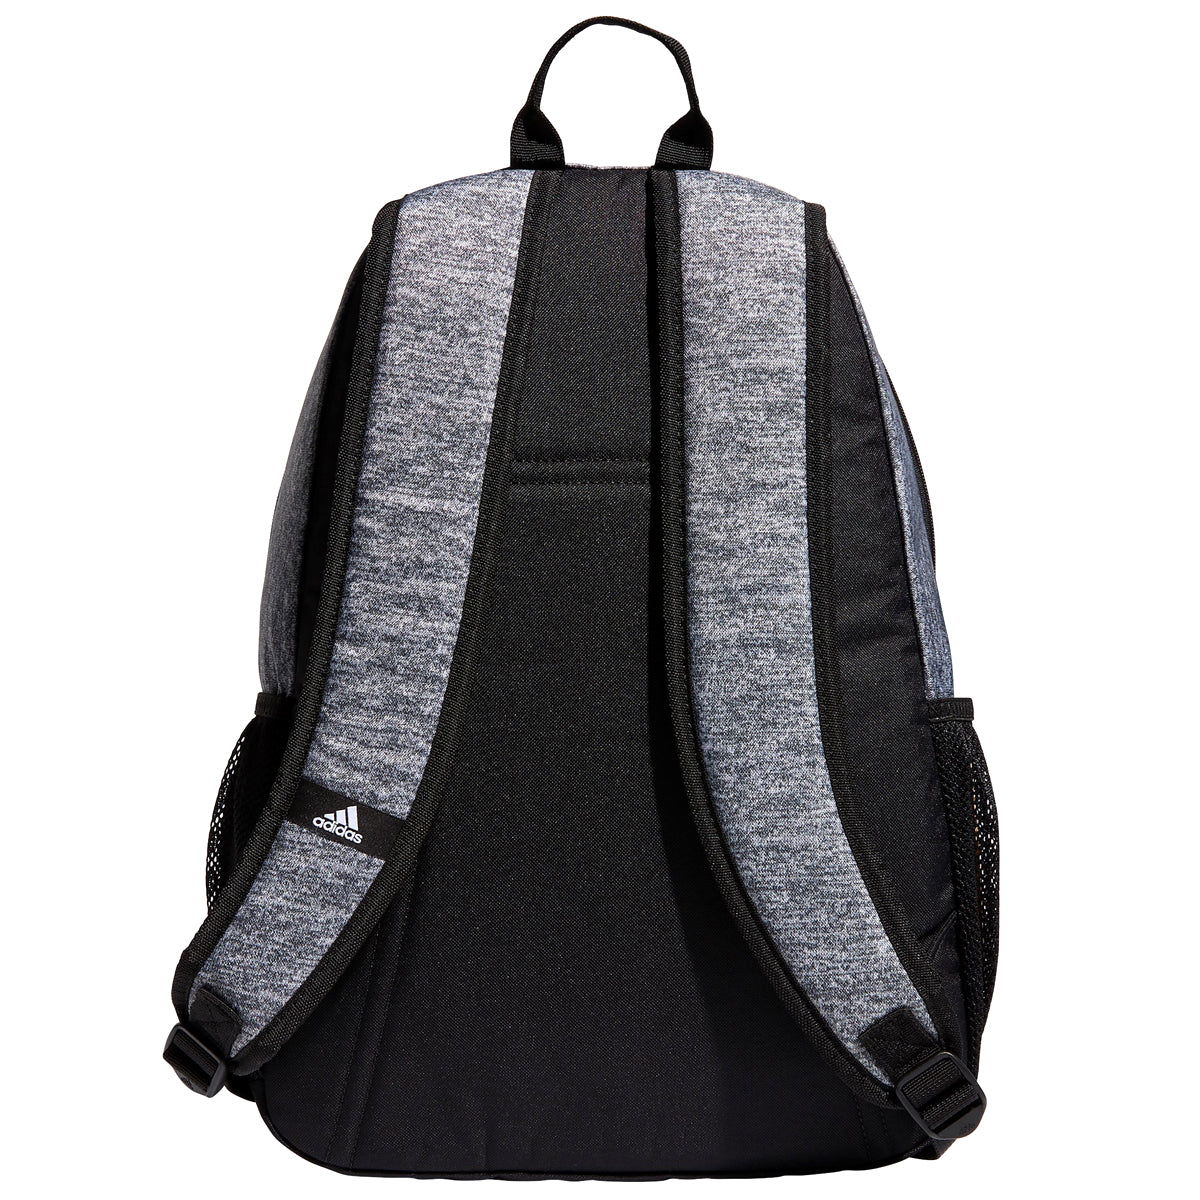 adidas Foundation V Backpack Bags Adidas 